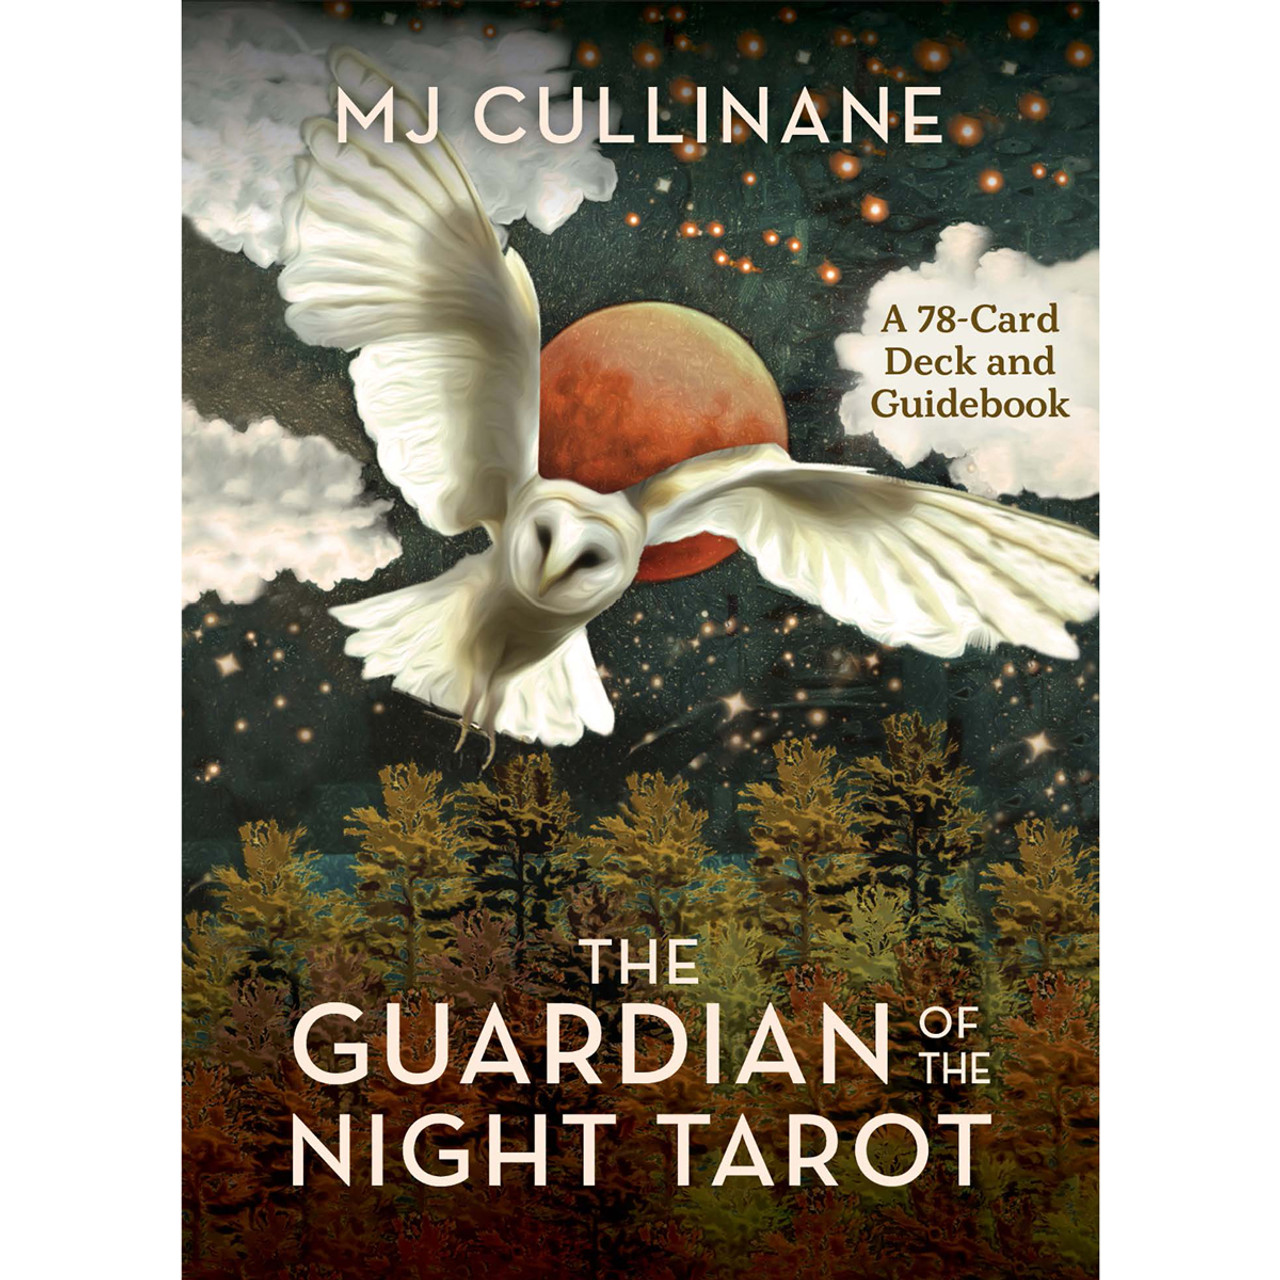 The Guardian of the Night Tarot